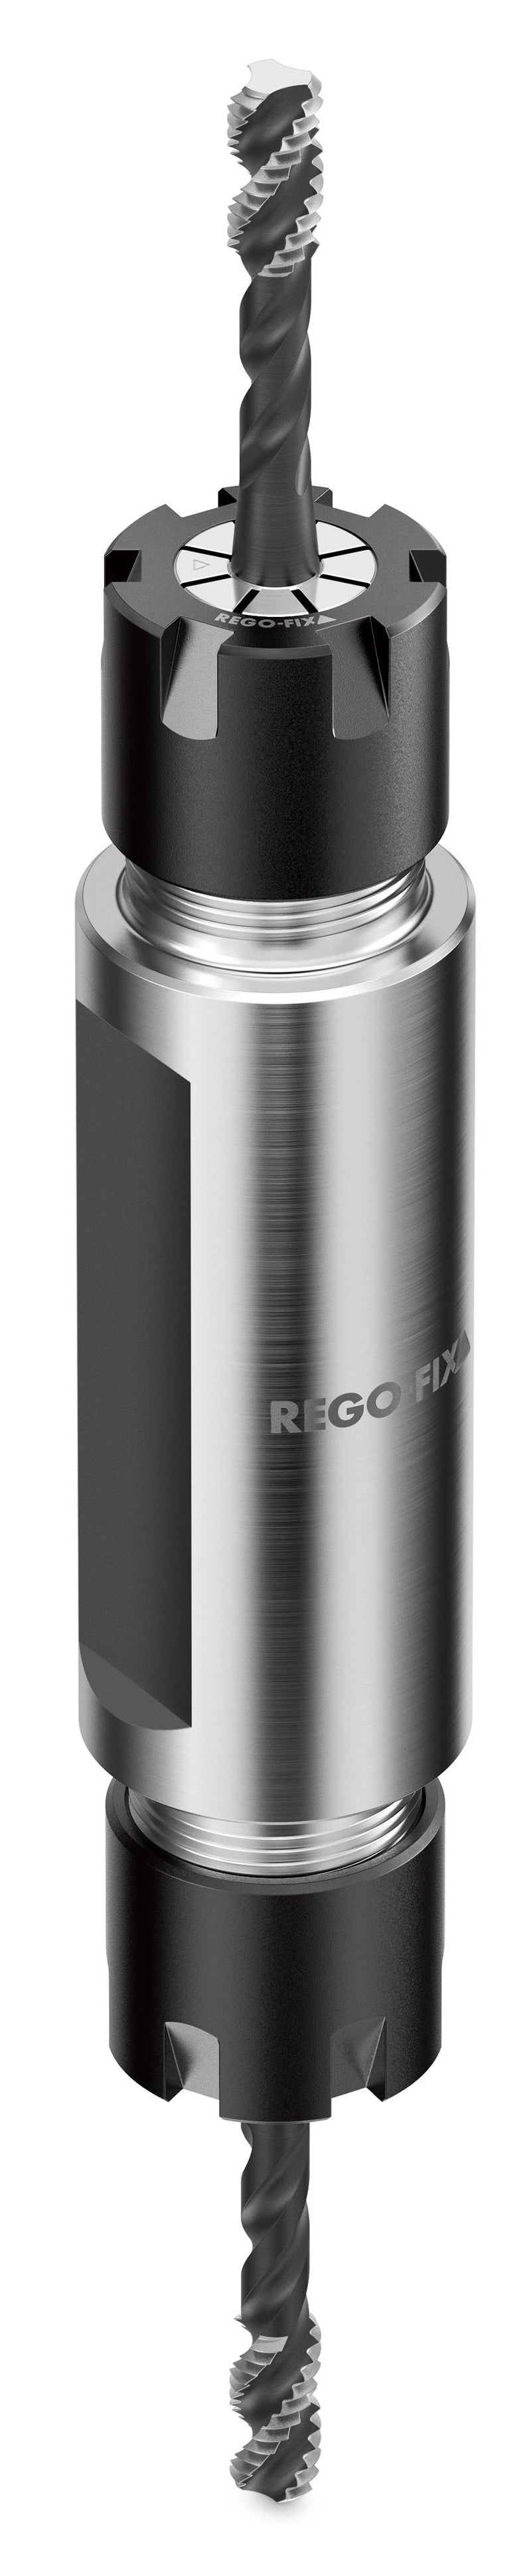 Rego-Fix CYDF 20 x 050/ERM 11 Tool Holder 2620.21124 (0647793)